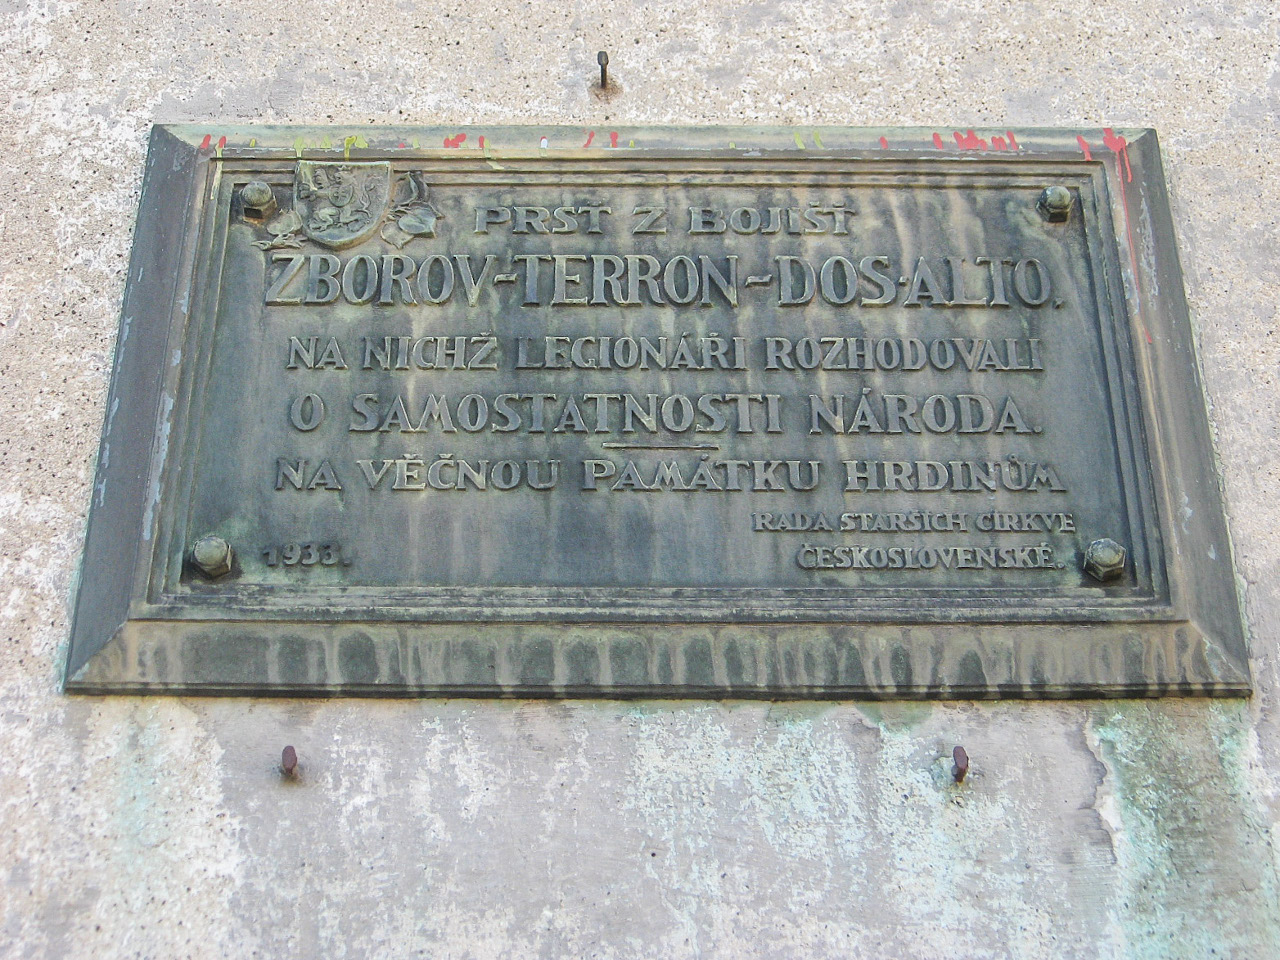 Olomouc, Farského, 2. Olomouc — Memorial plaques